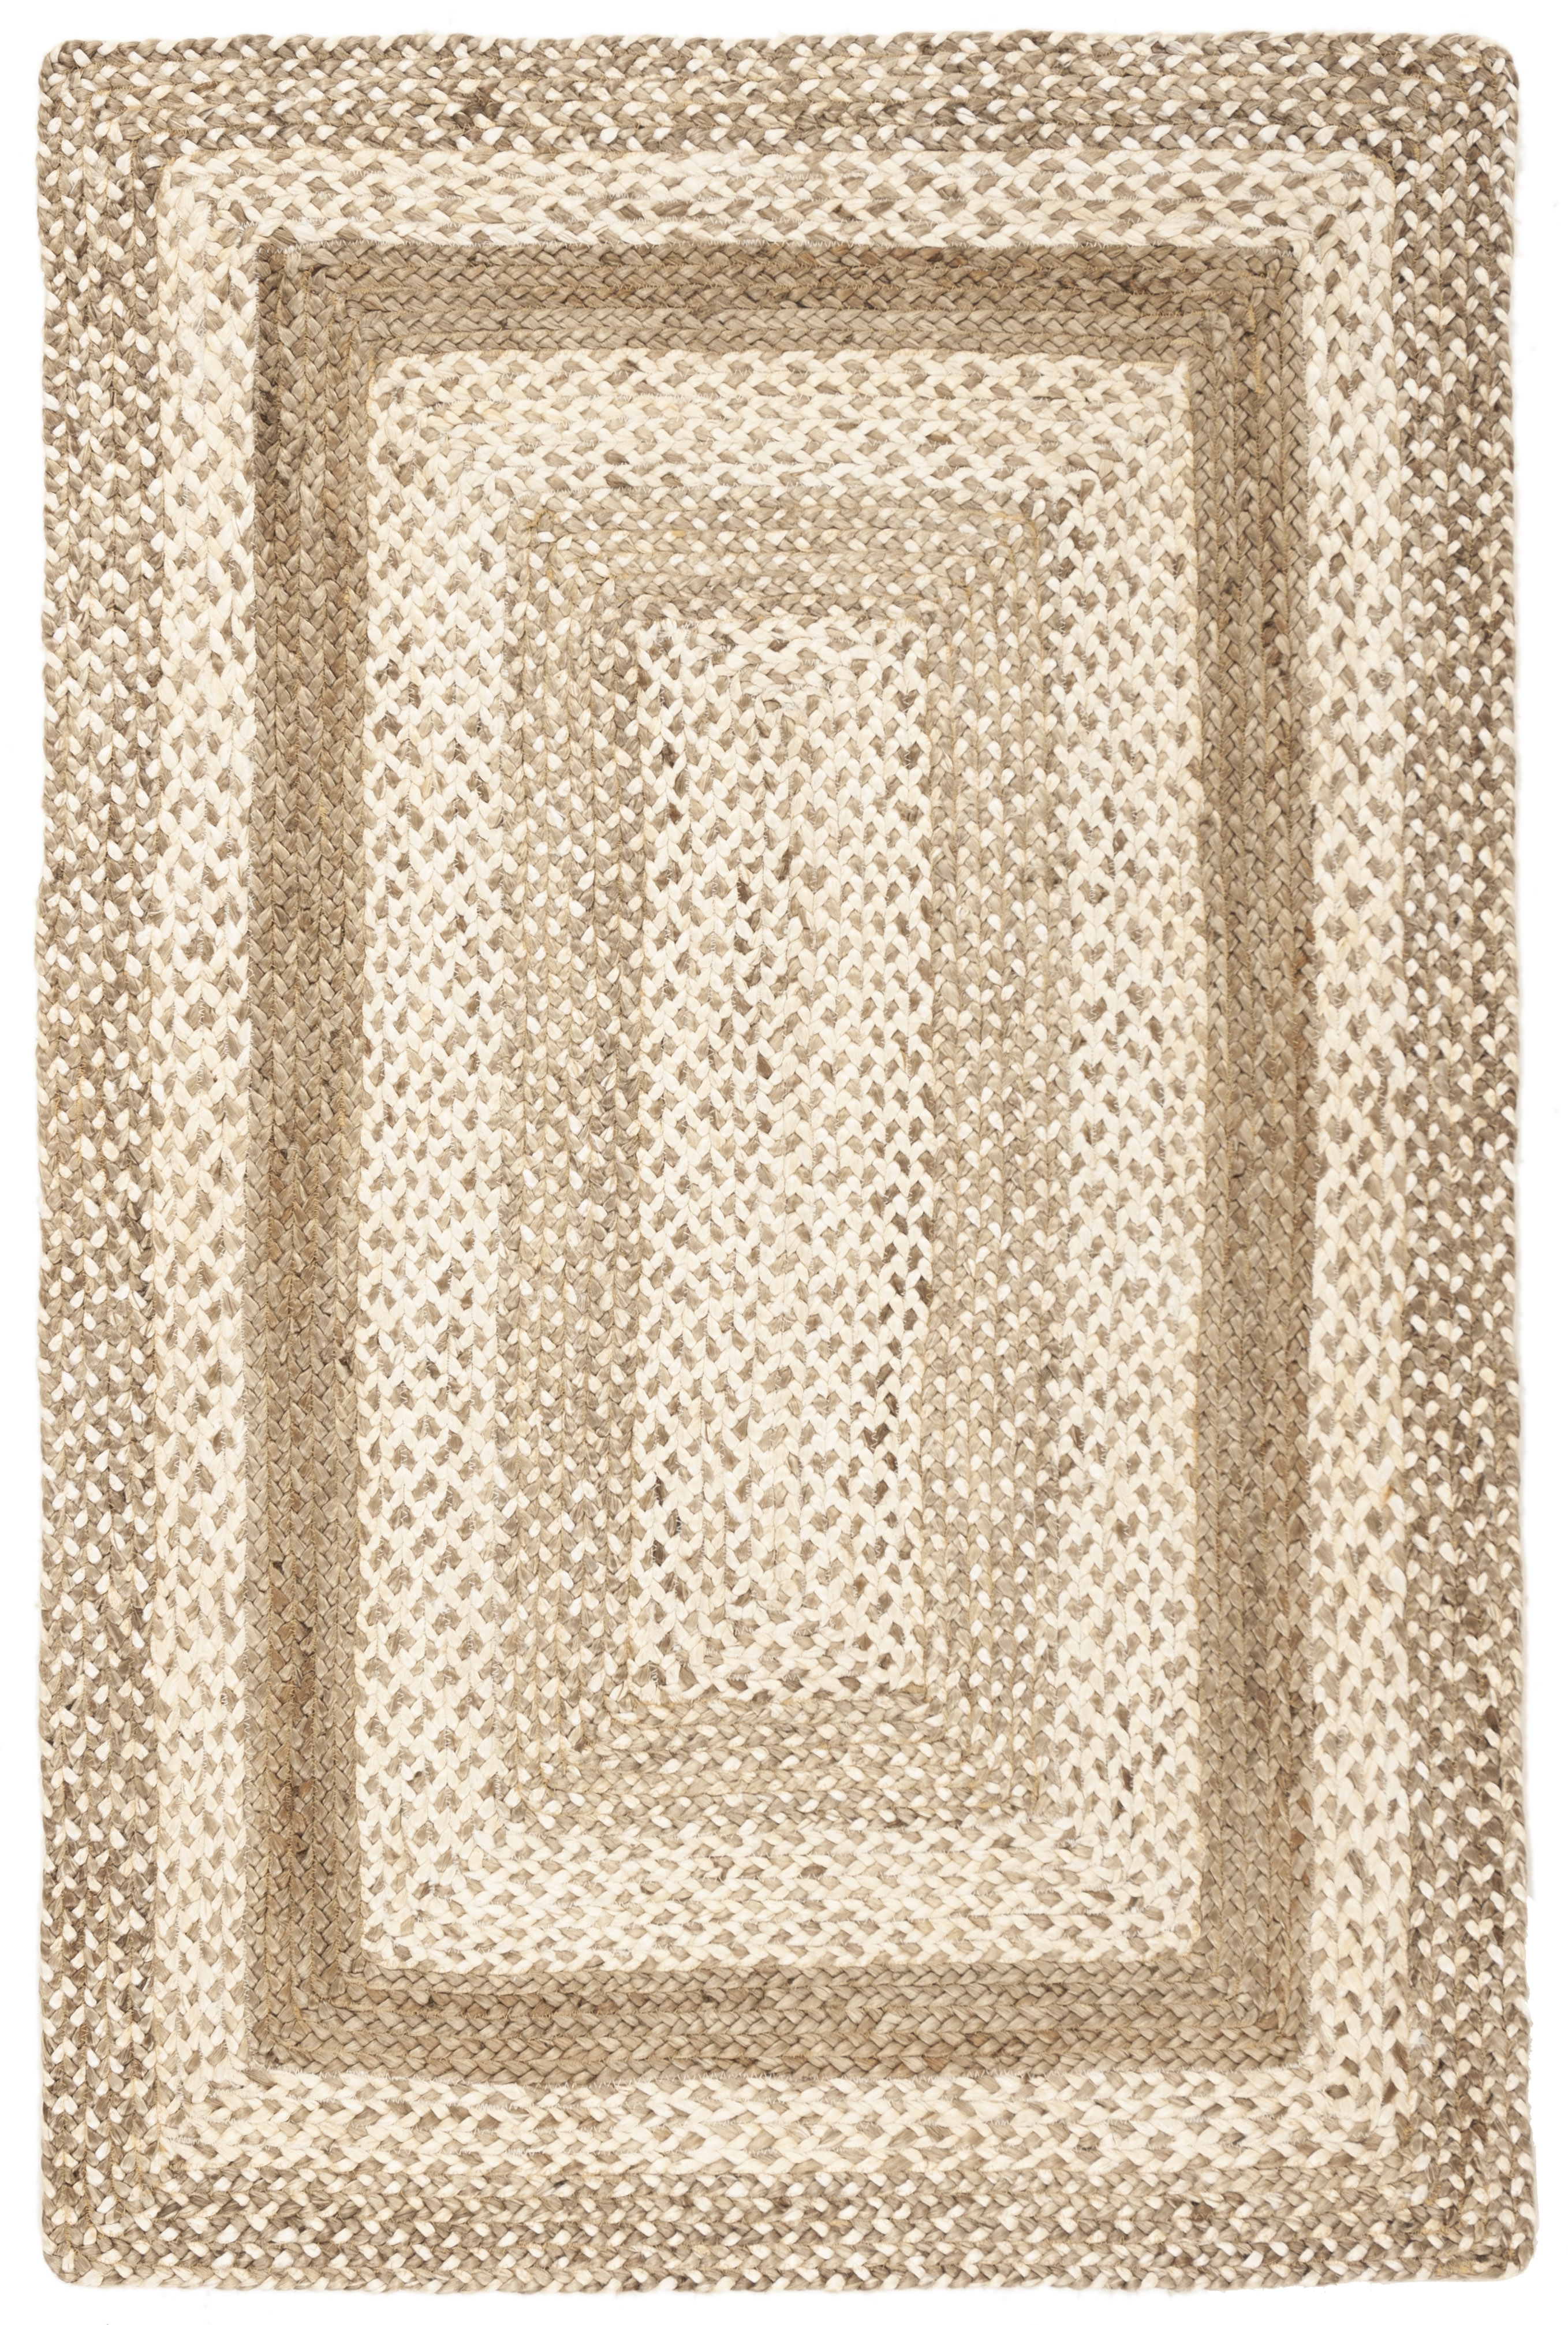 Arlo Home Hand Woven Area Rug, NF884F, Grey/Ivory,  3' X 5' - Image 0